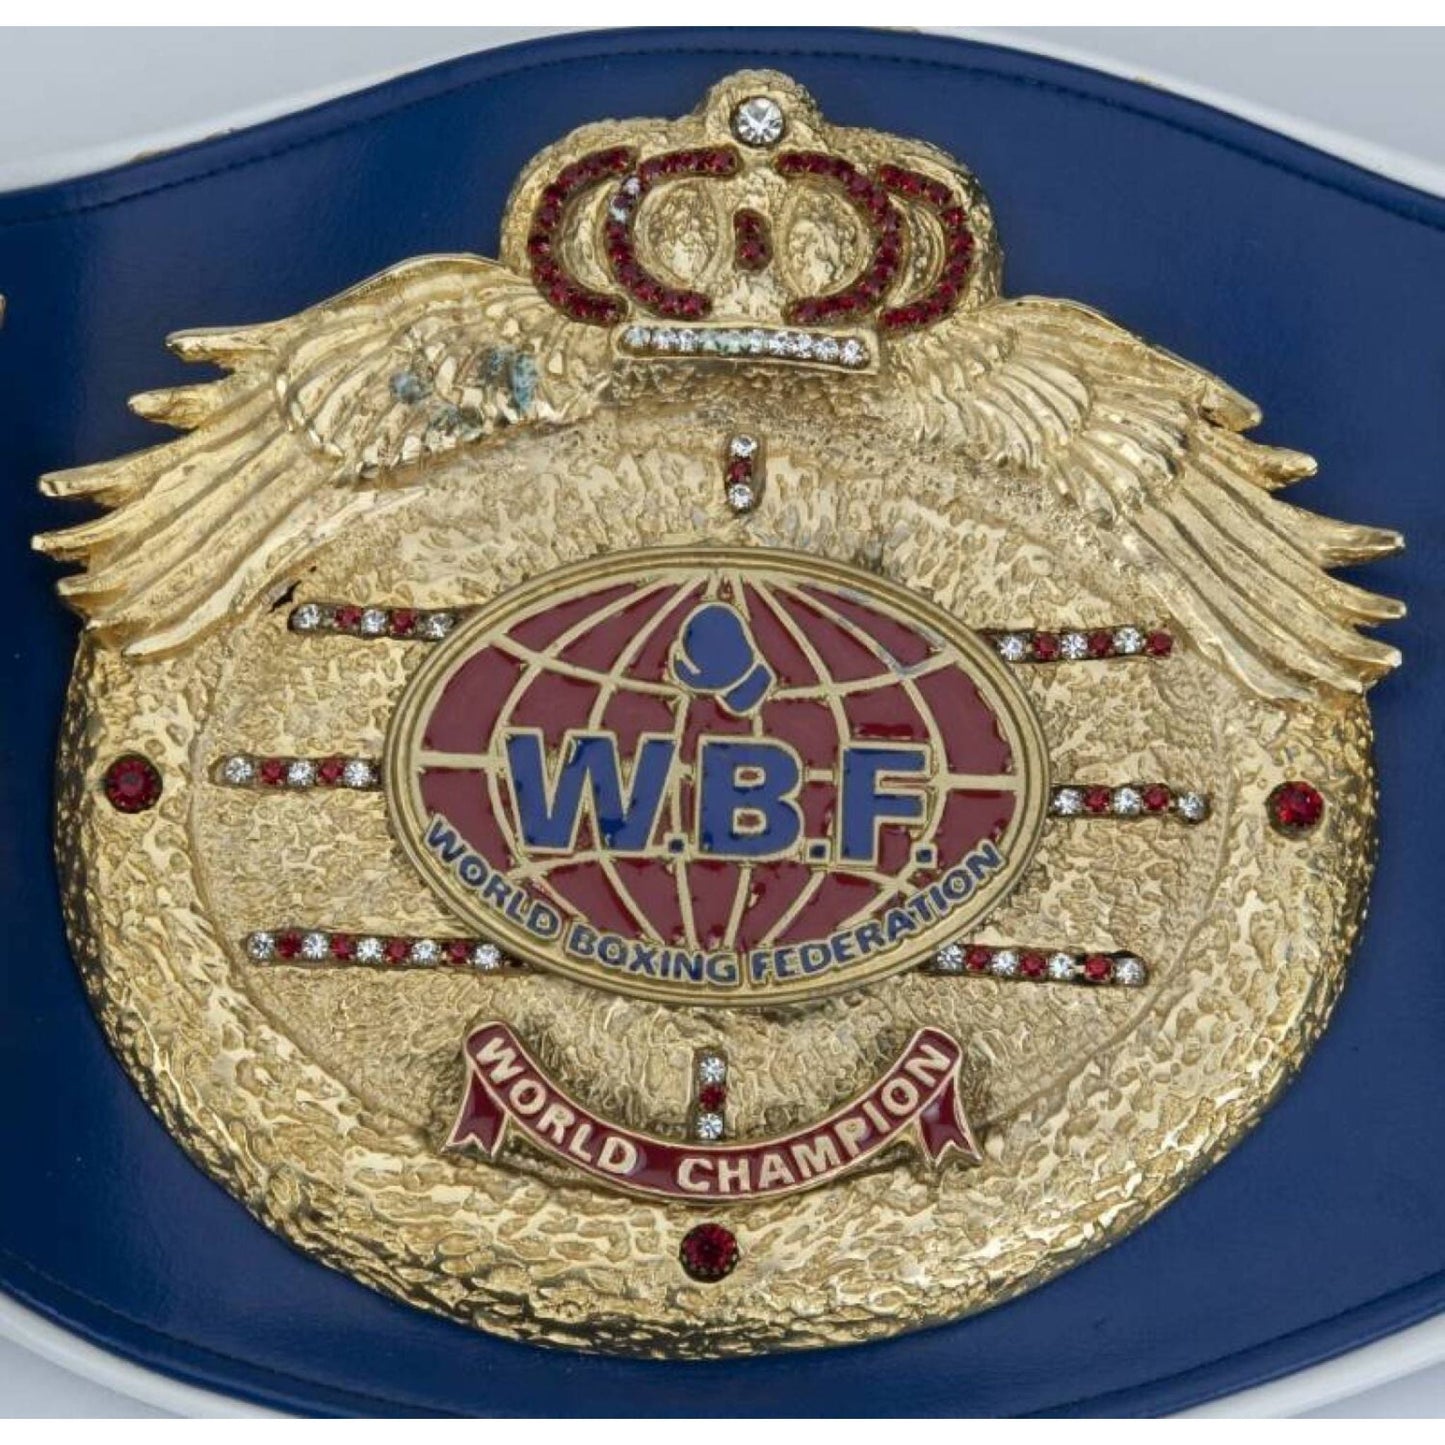 WBF (World Boxing Federation) Boxing Championship Replica Belt Adult size